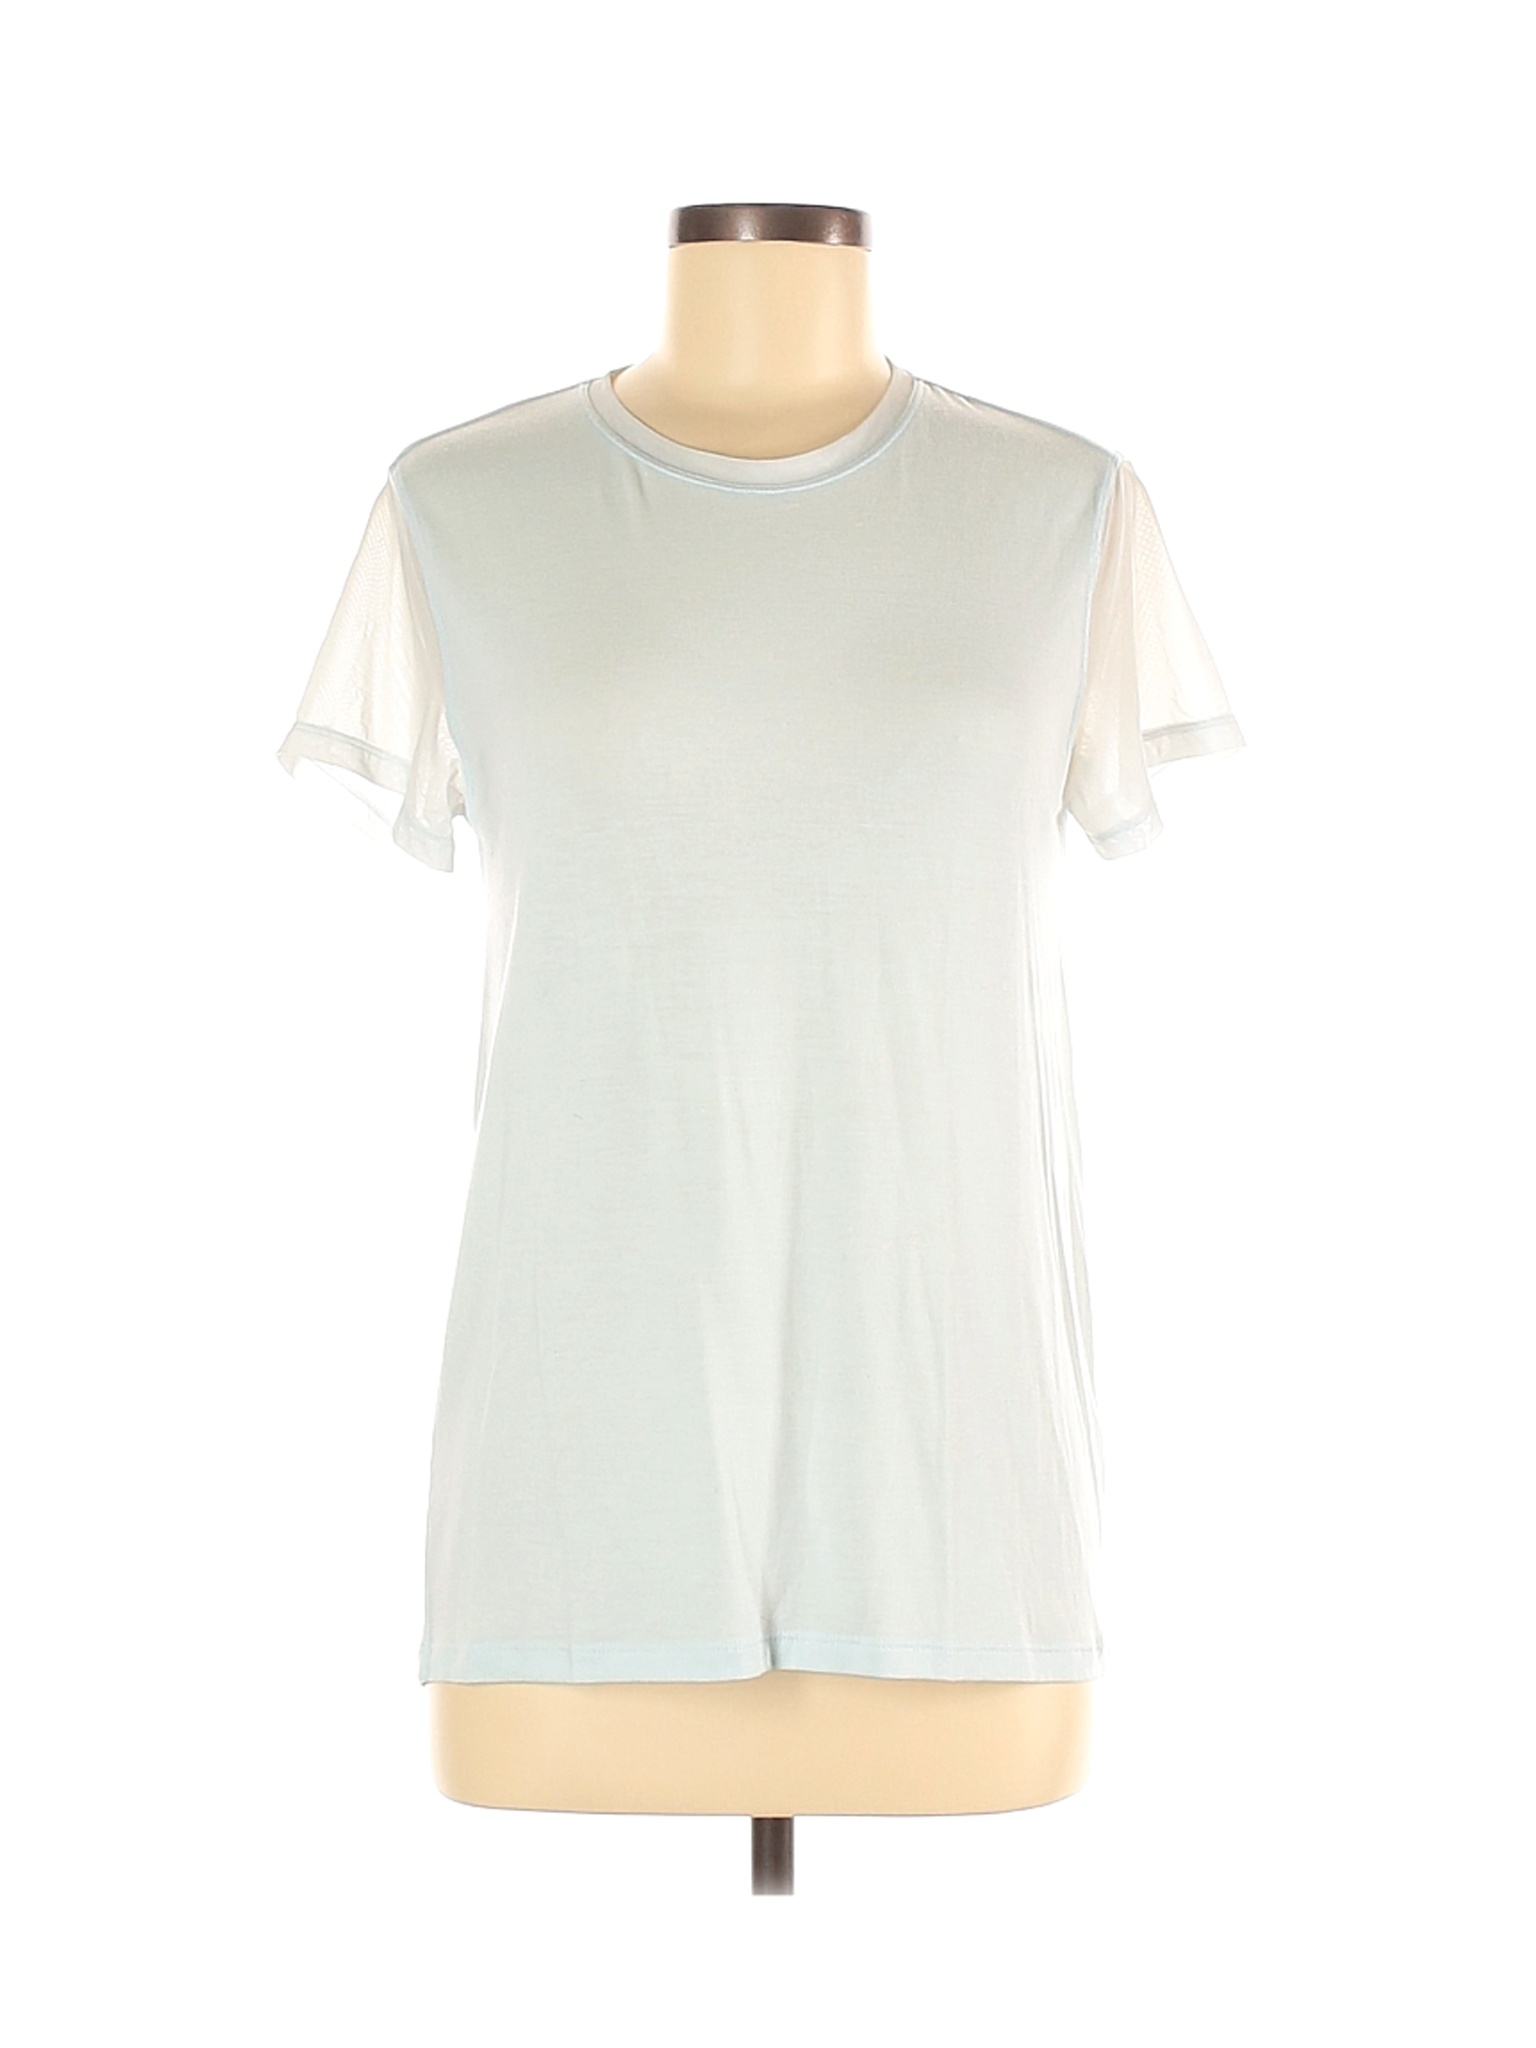 Athleta Women White Active T-Shirt M | eBay